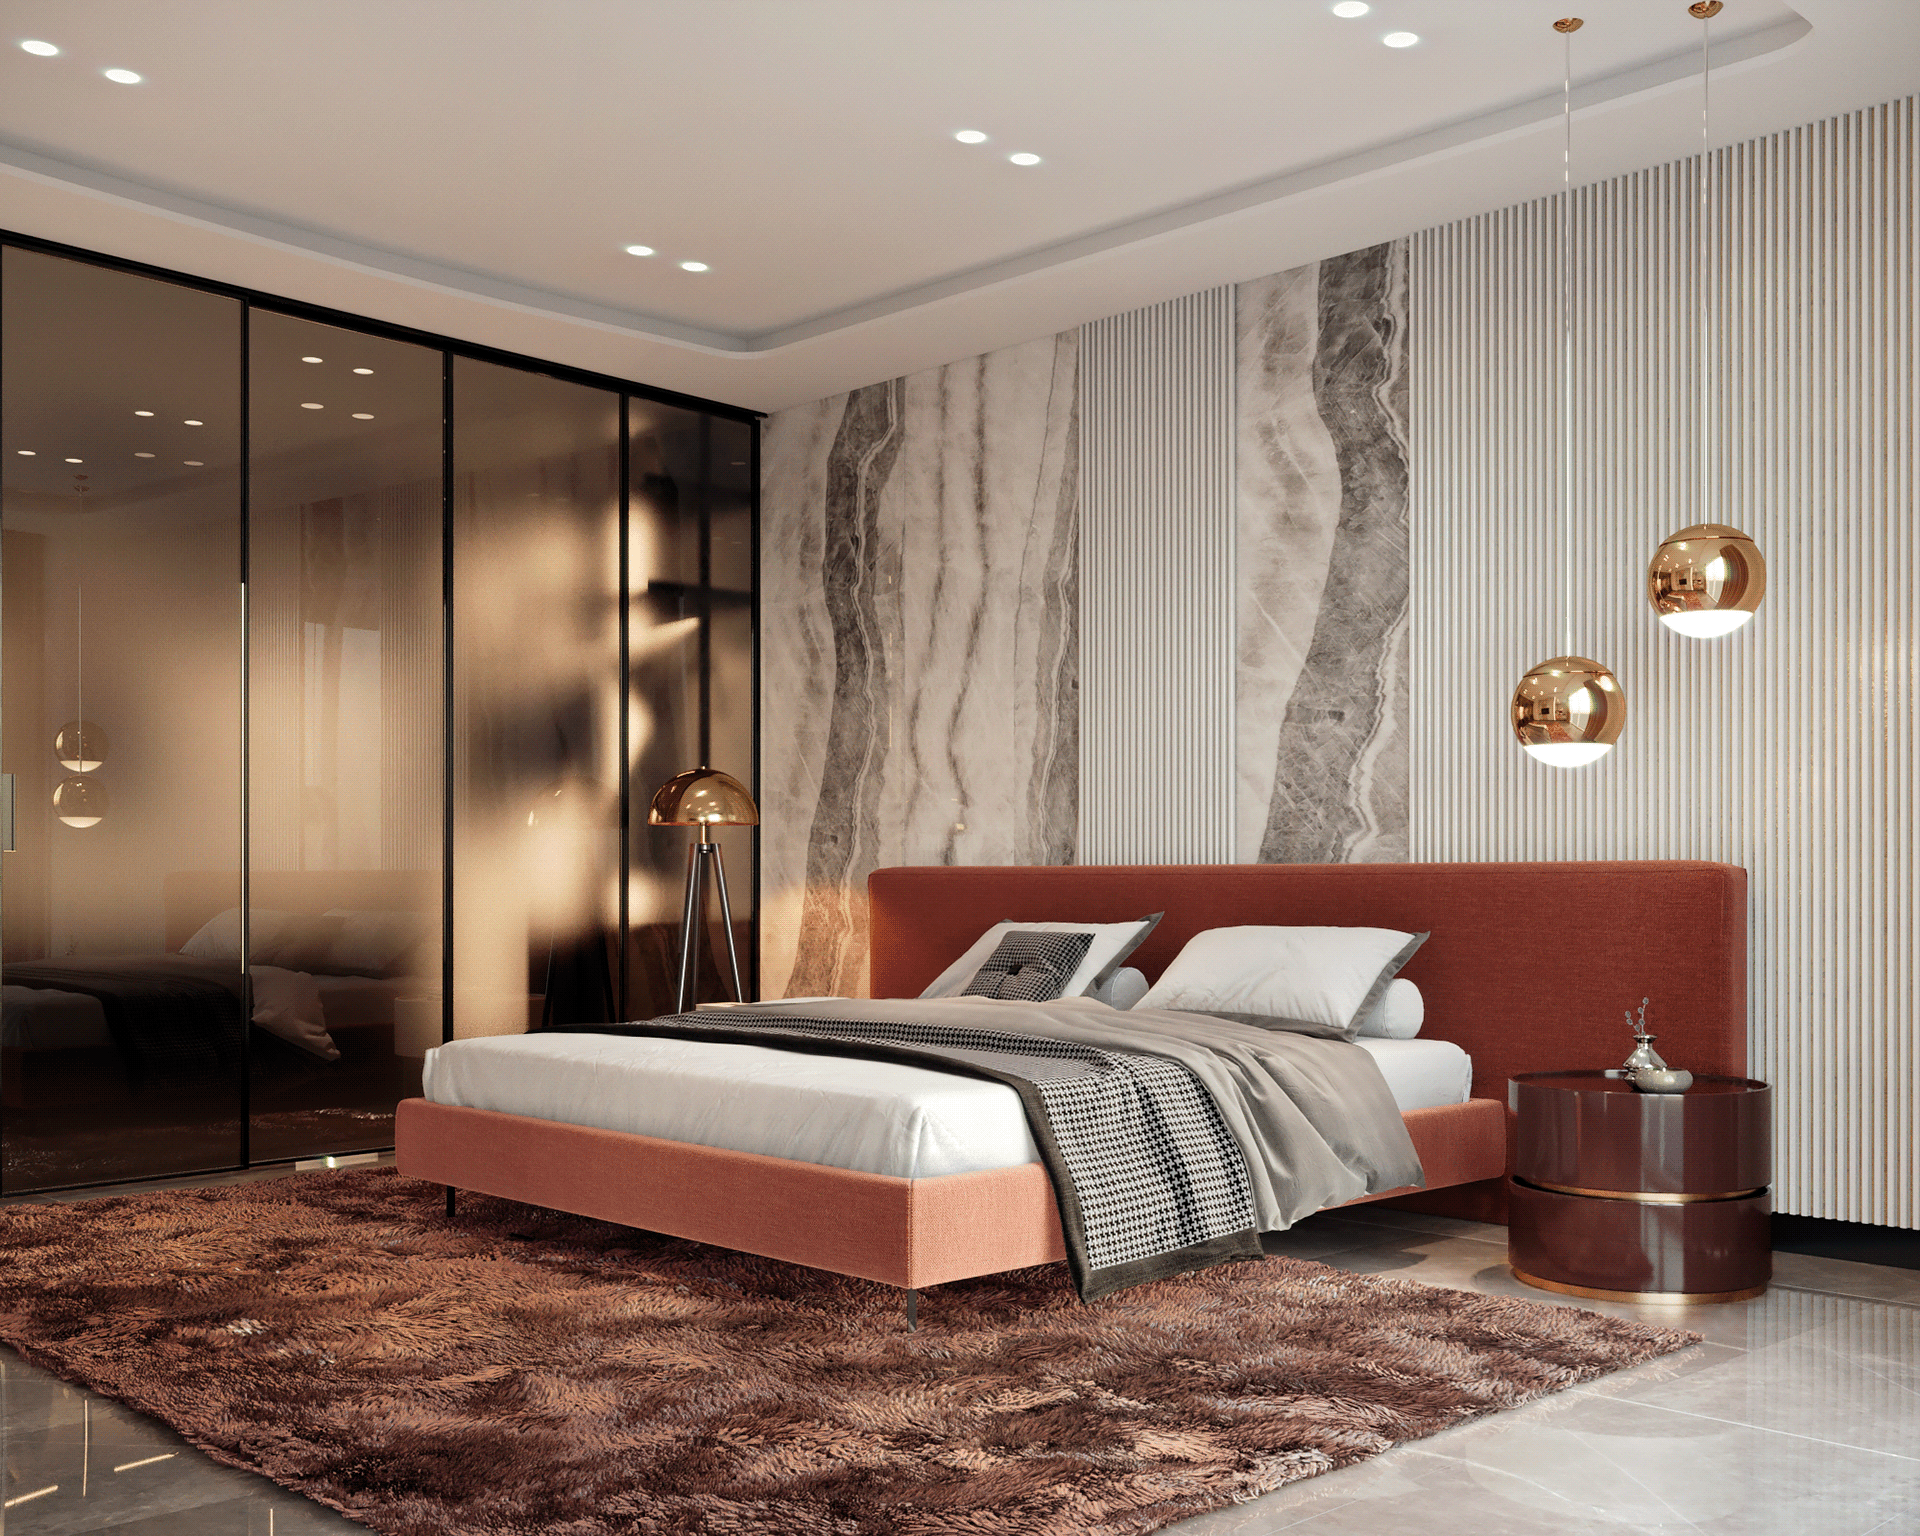 Master bedroom design on Behance